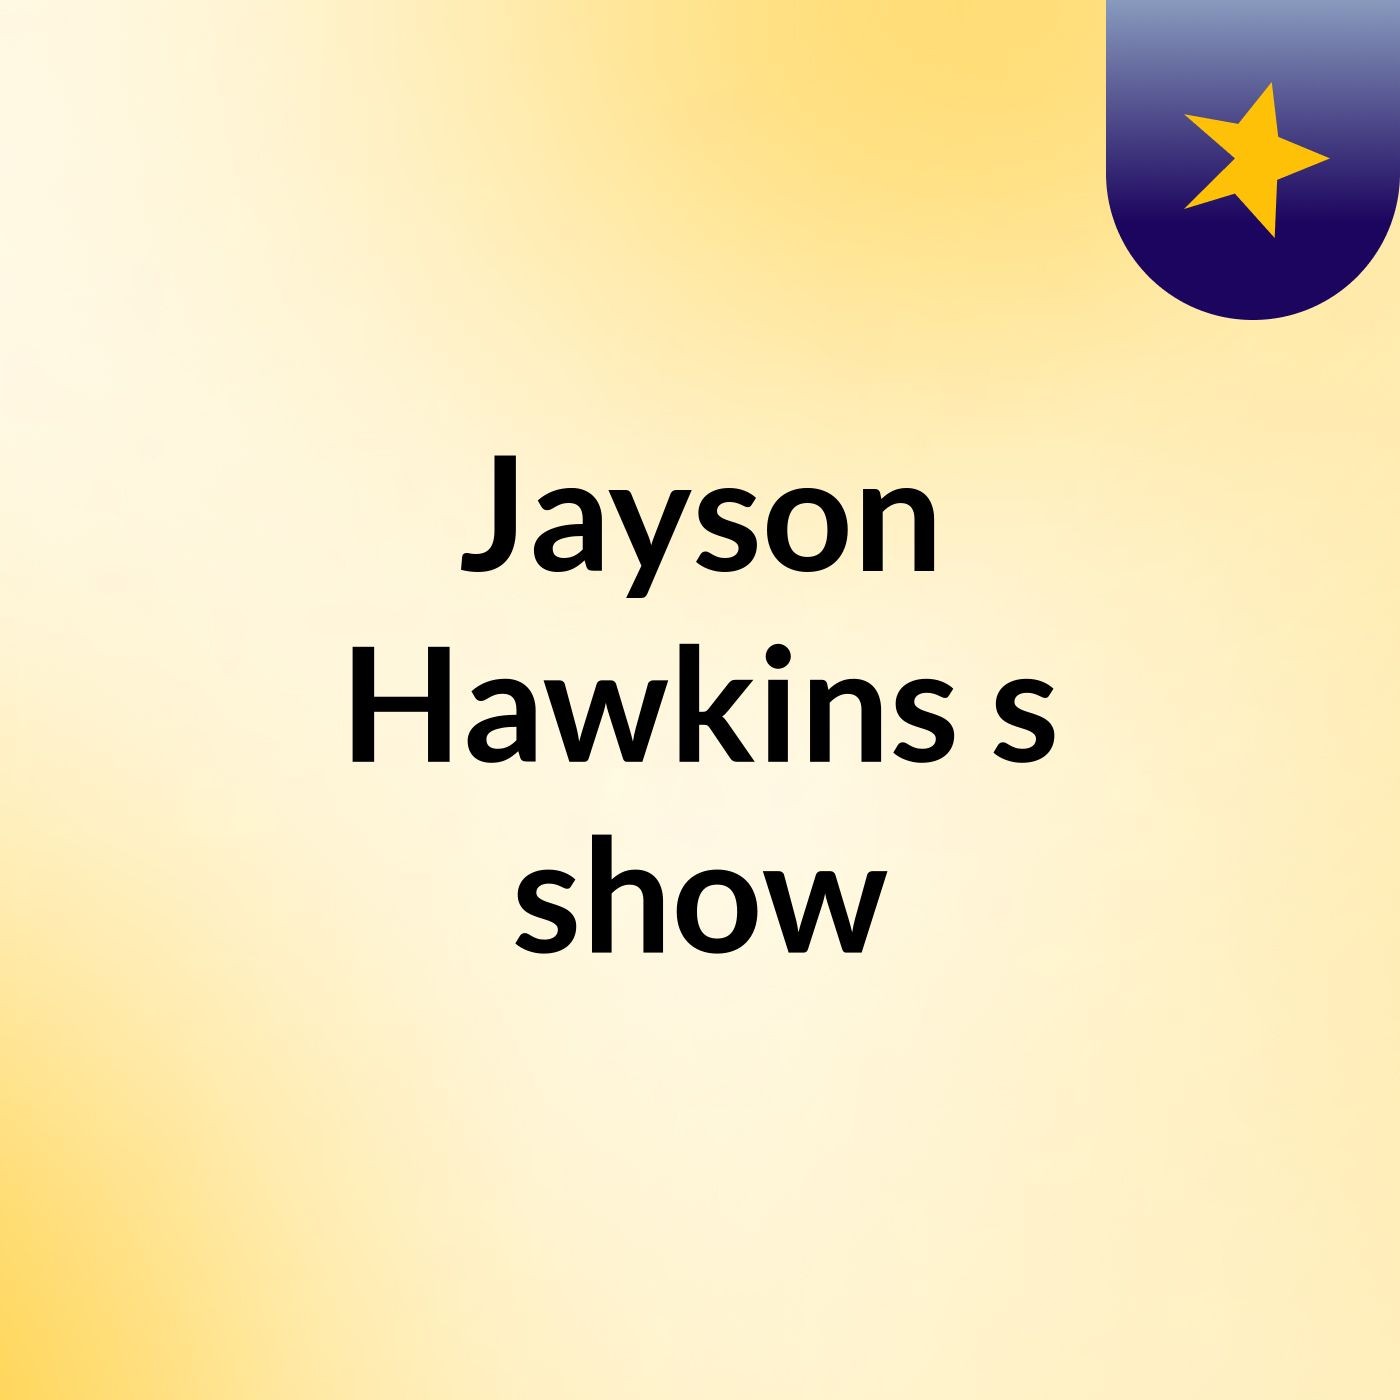 Jayson Hawkins's show